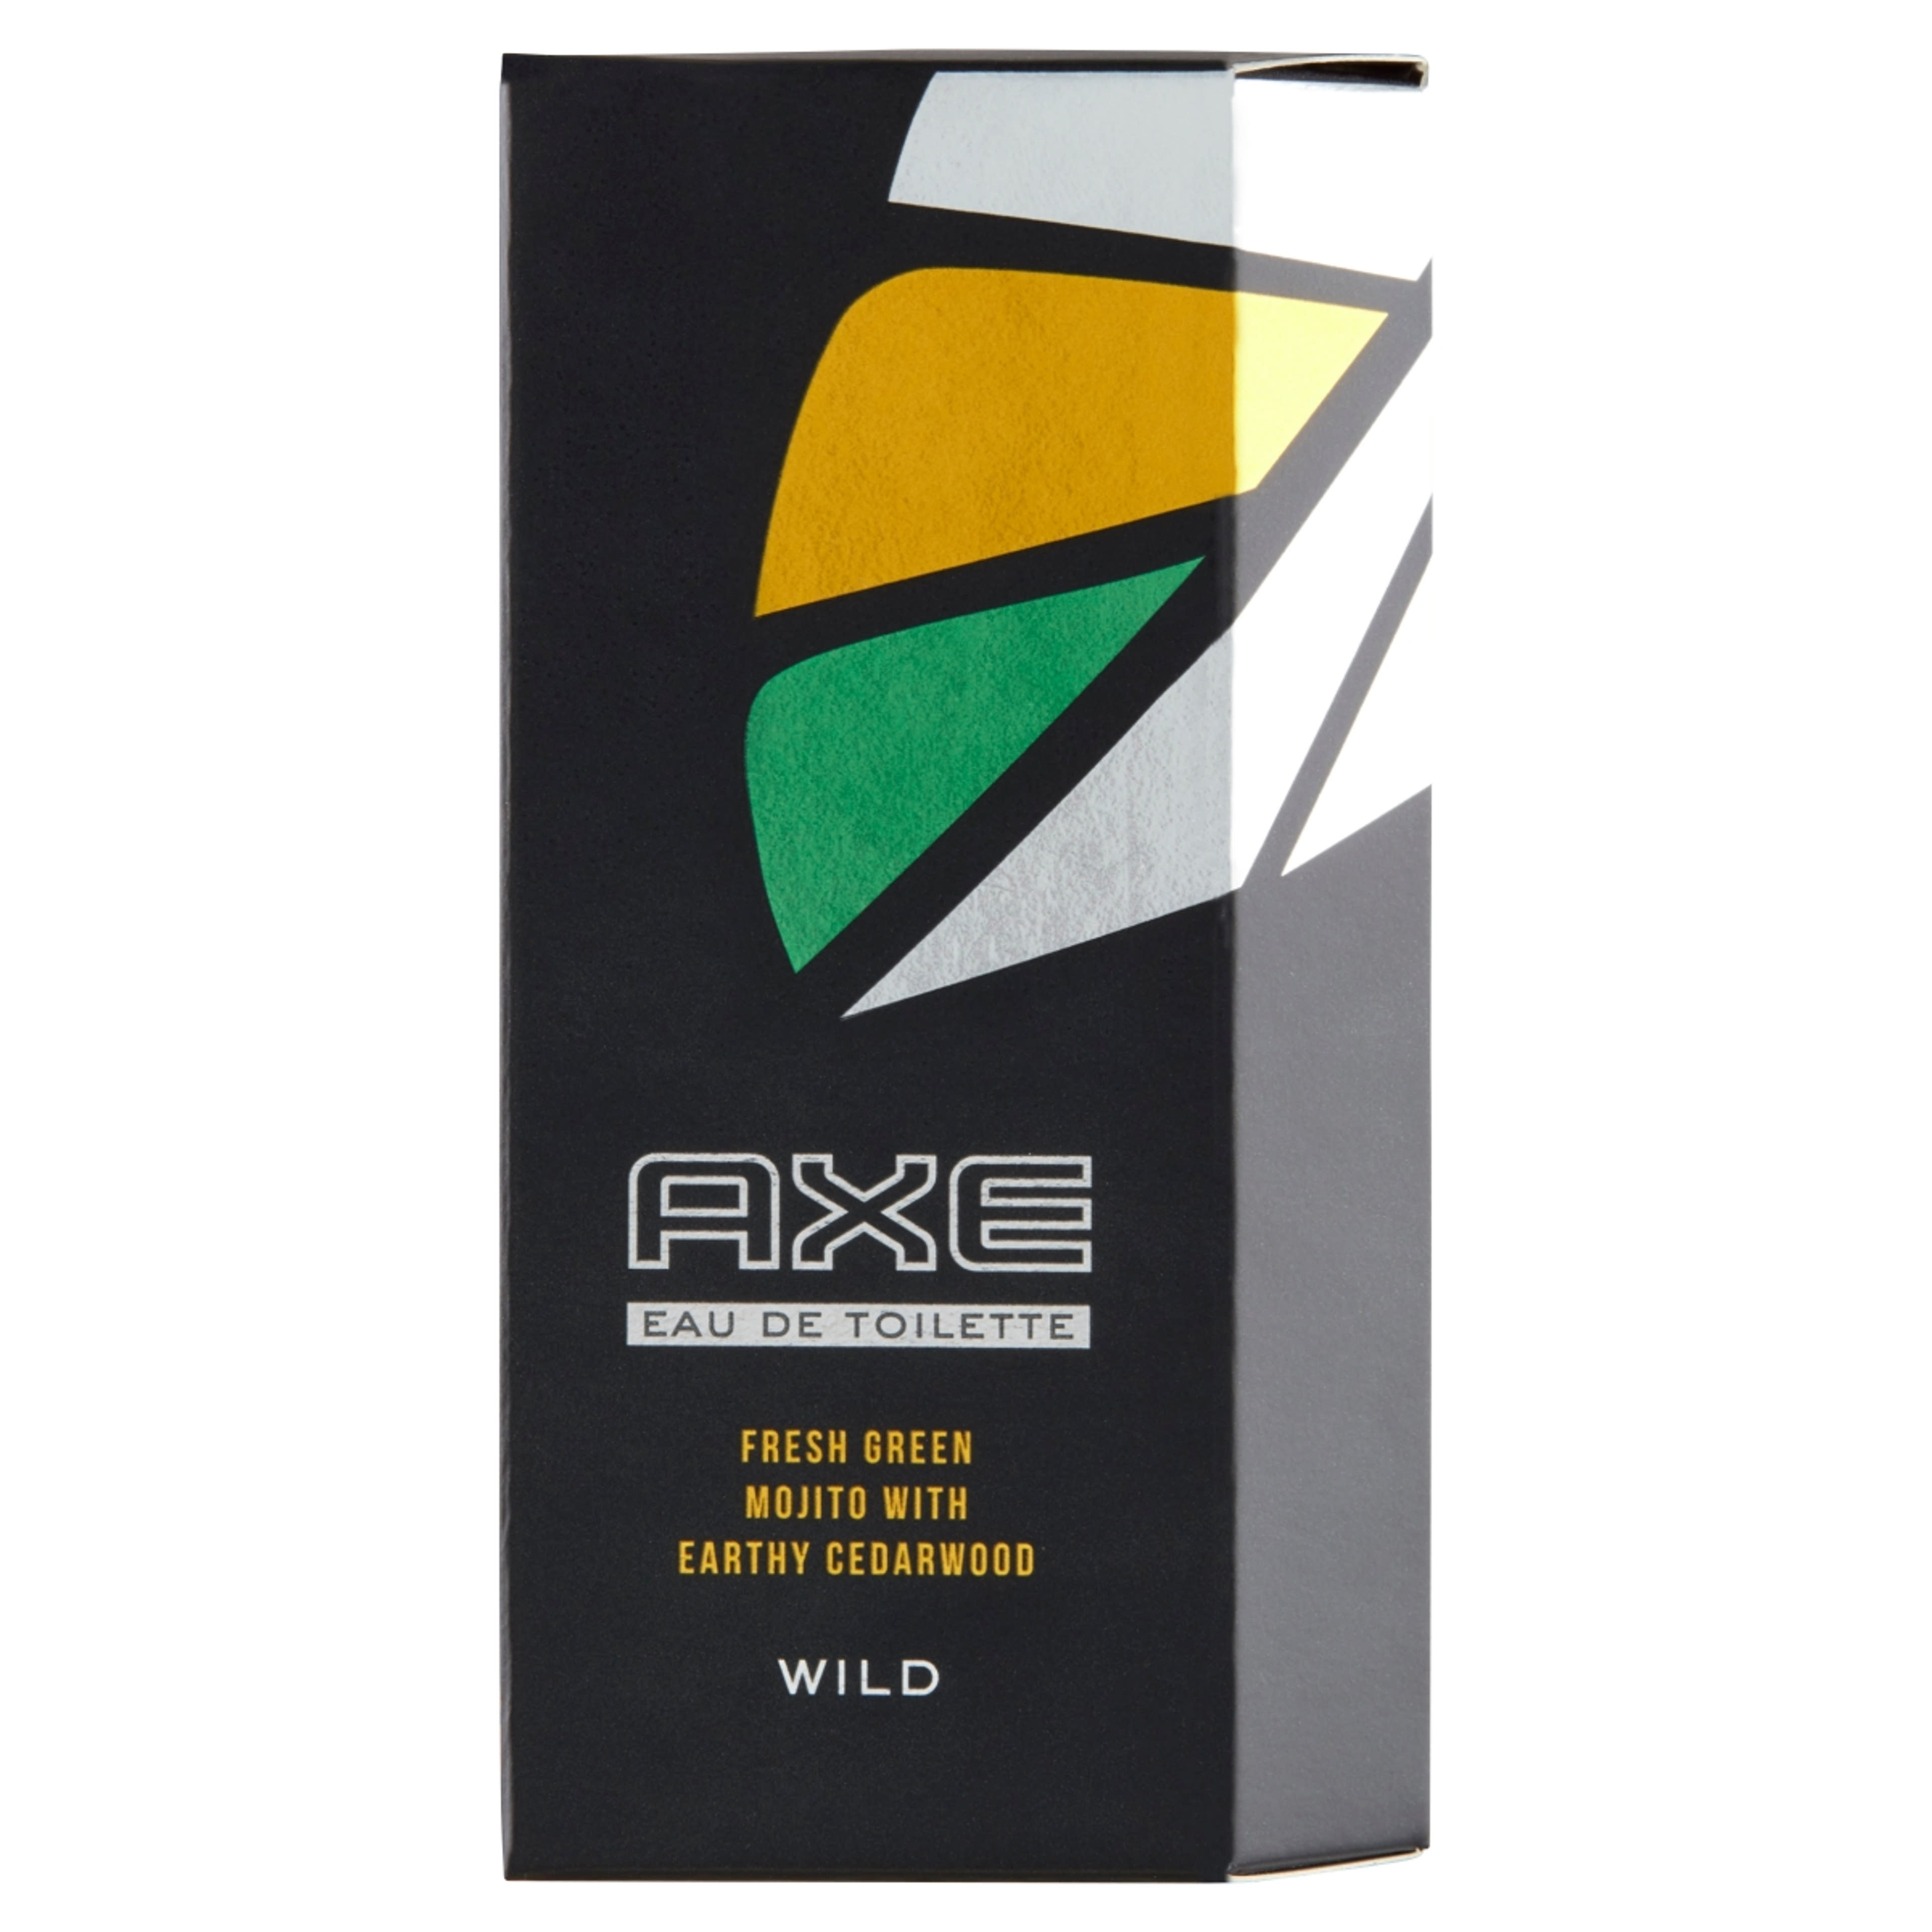 Axe wild férfi eau de toilette - 50 ml